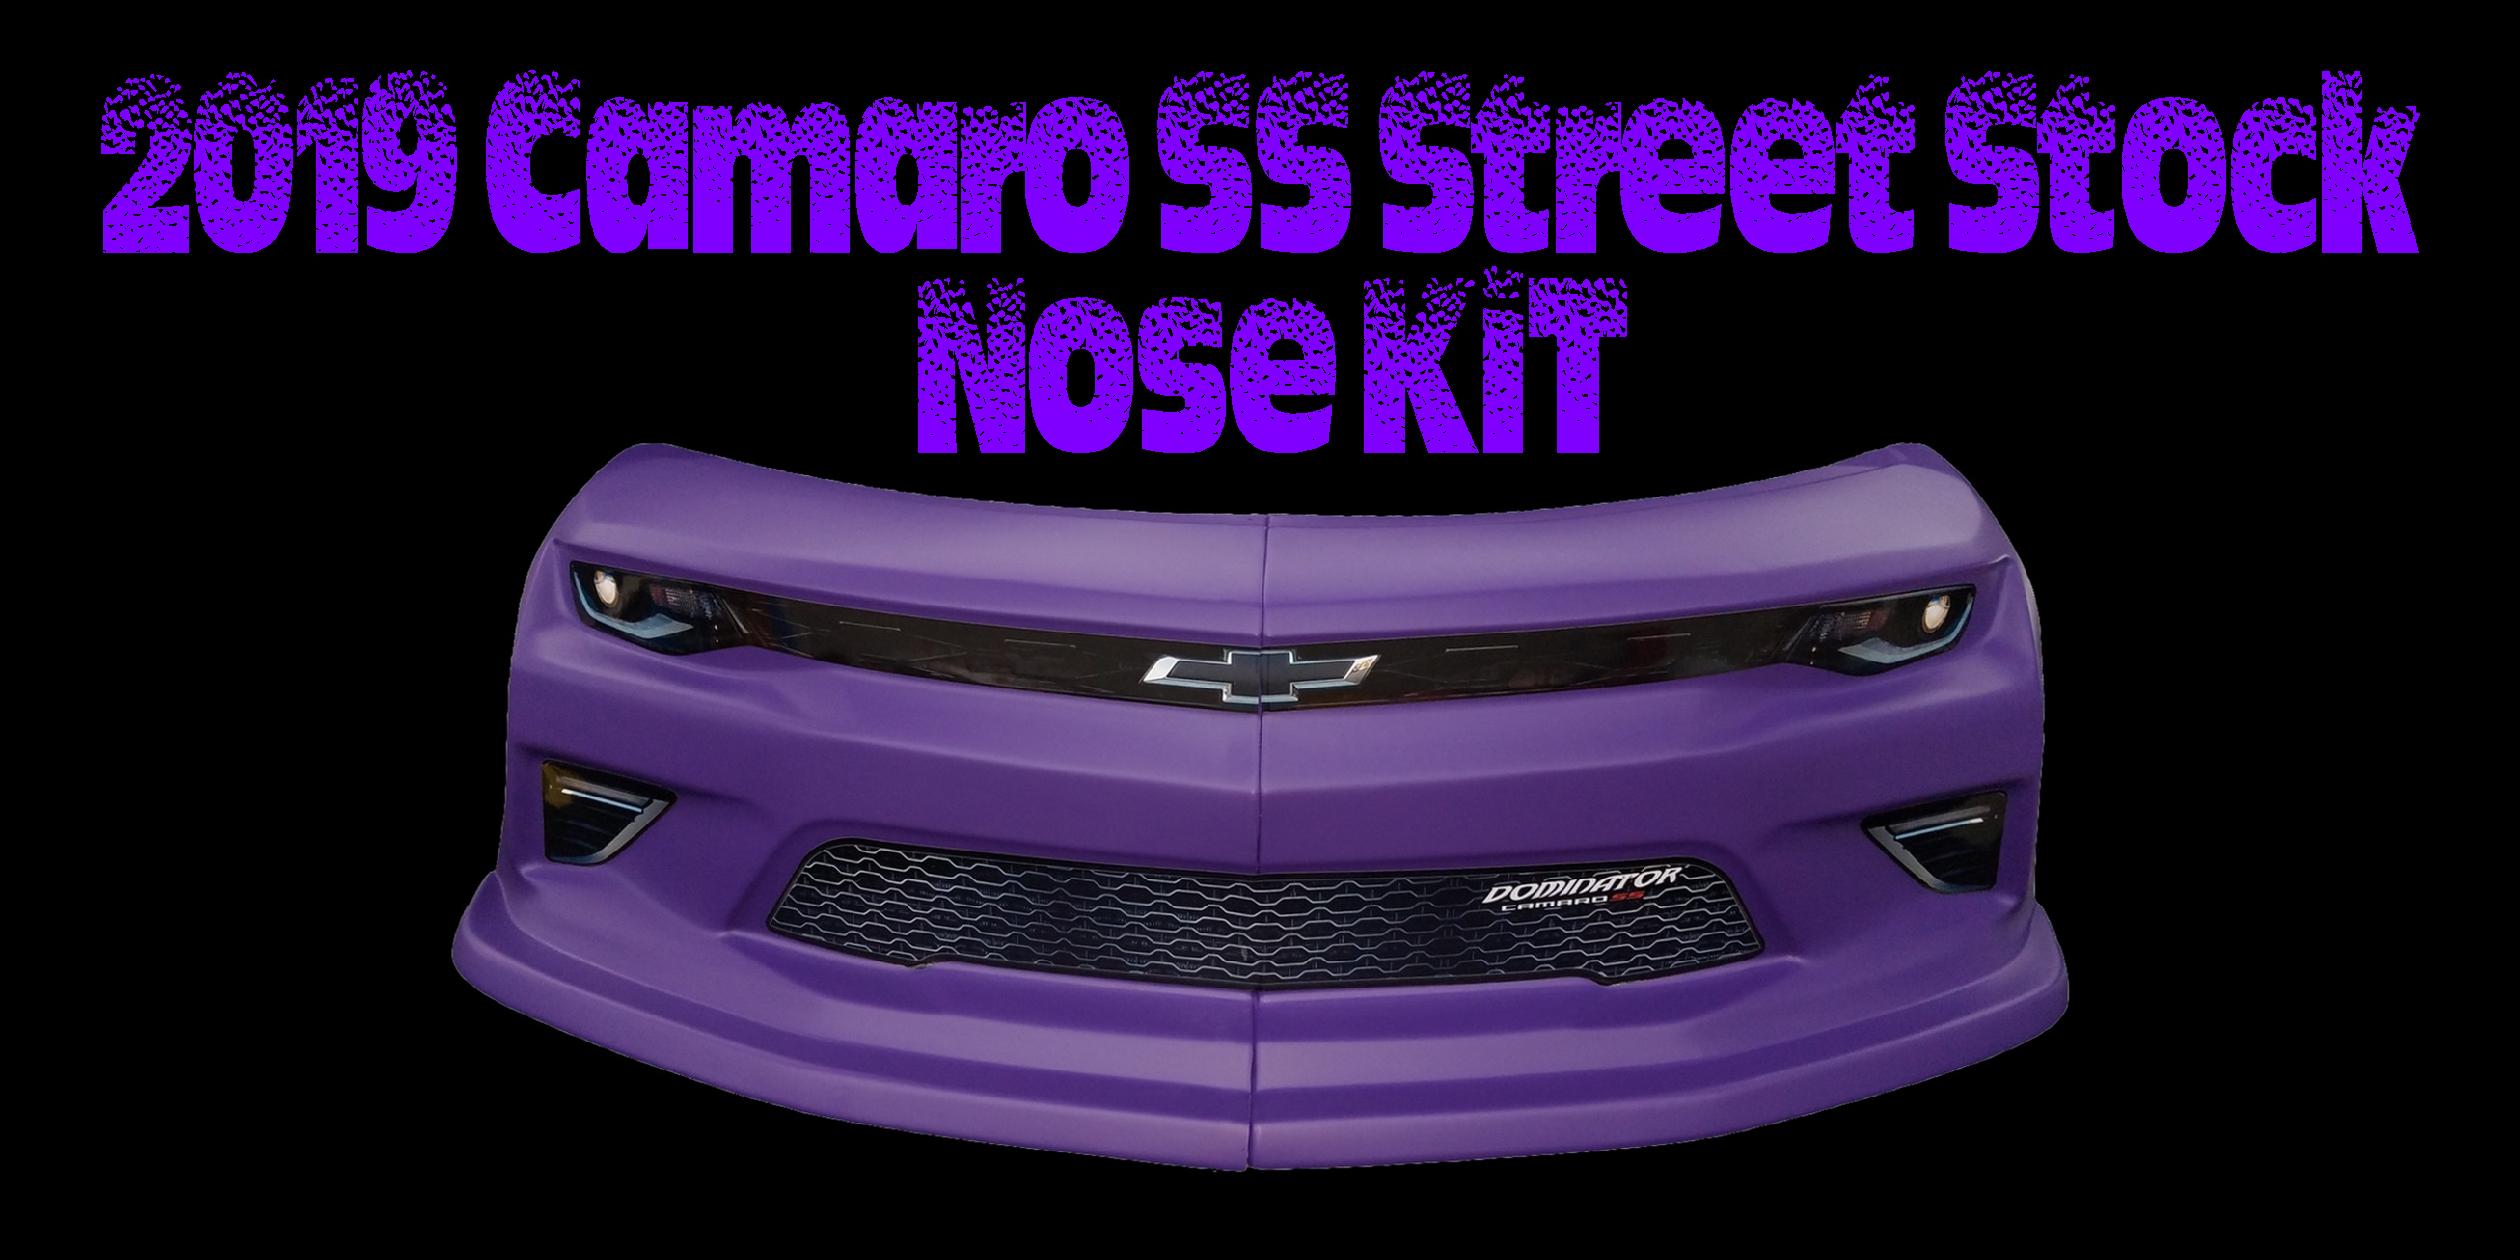 SS Street Stock Camaro Aluminum Mesh Grill - Dominator Race Products